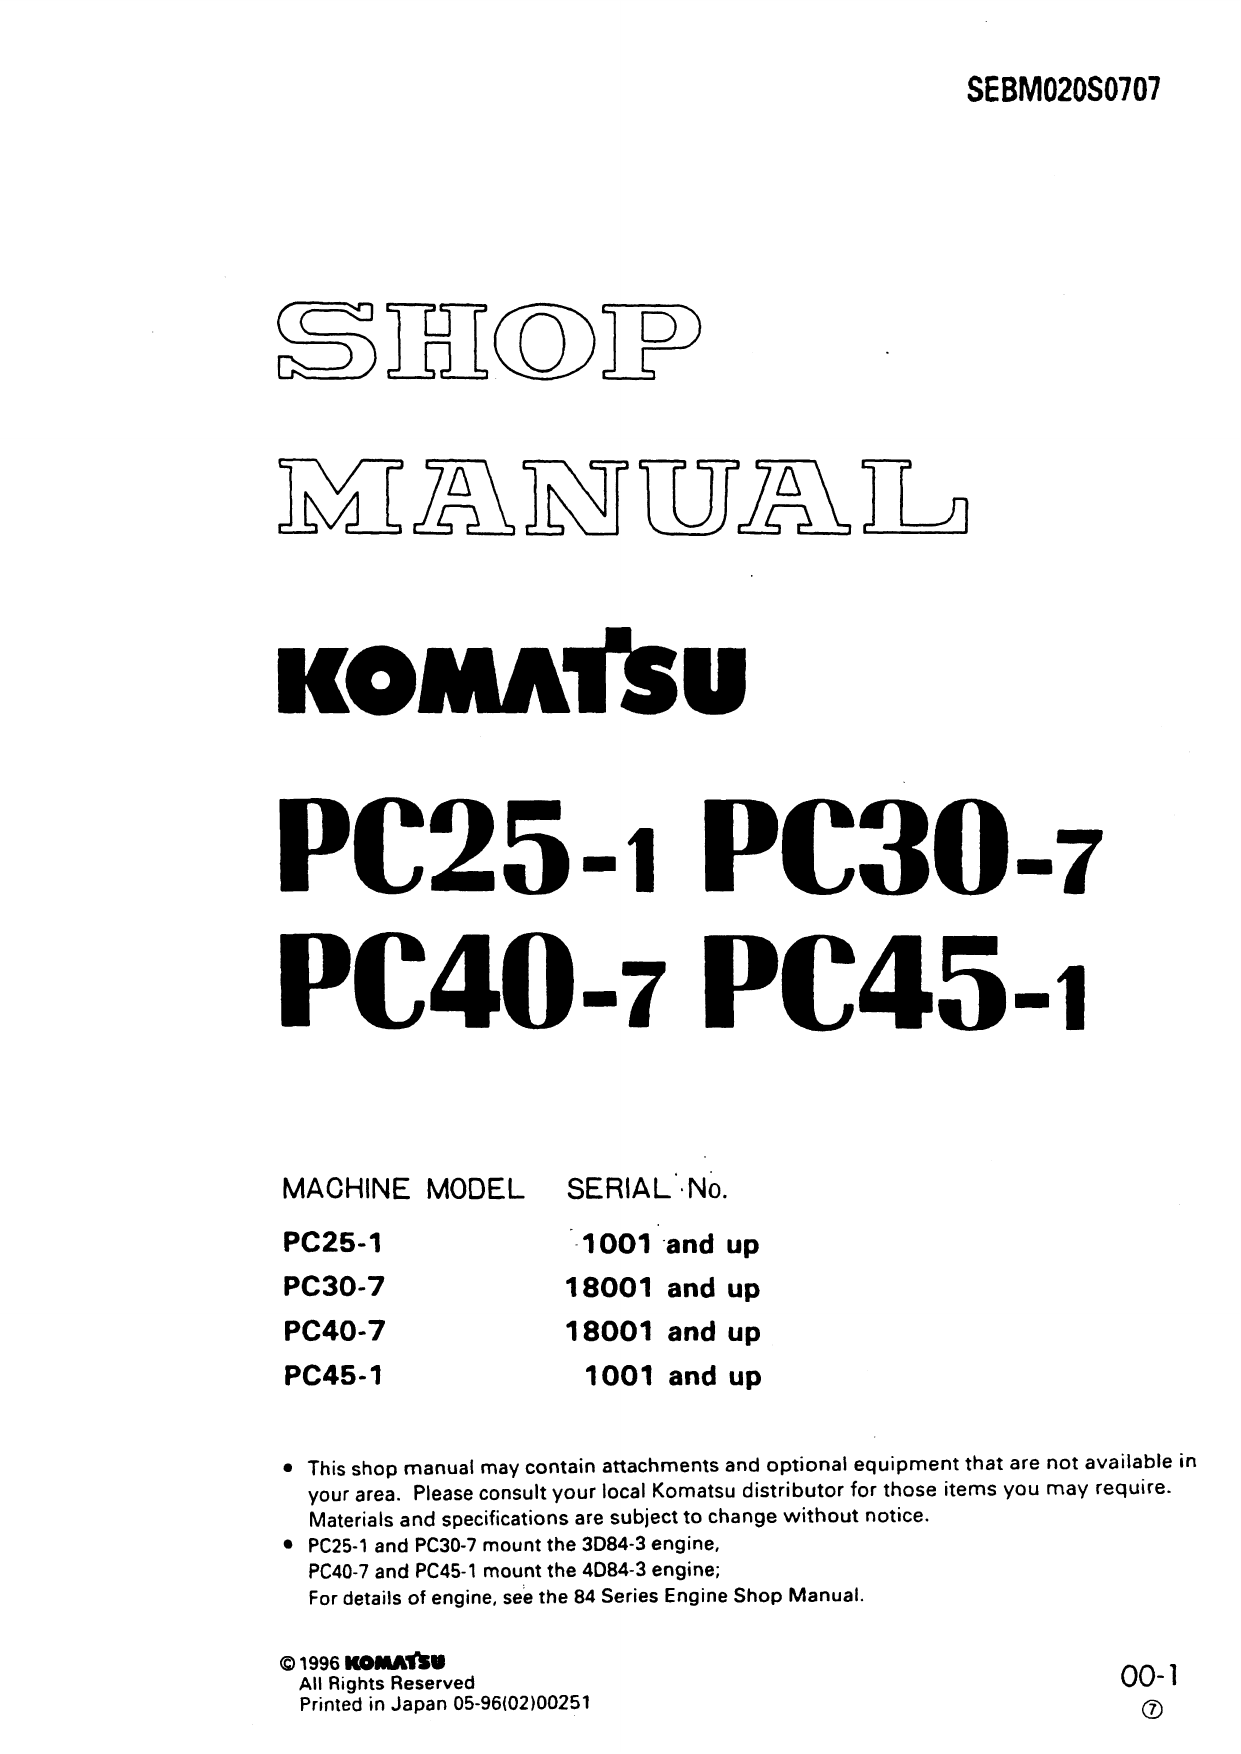 1995-1998 Komatsu PC45-1 hydraulic excavator shop manual Preview image 1